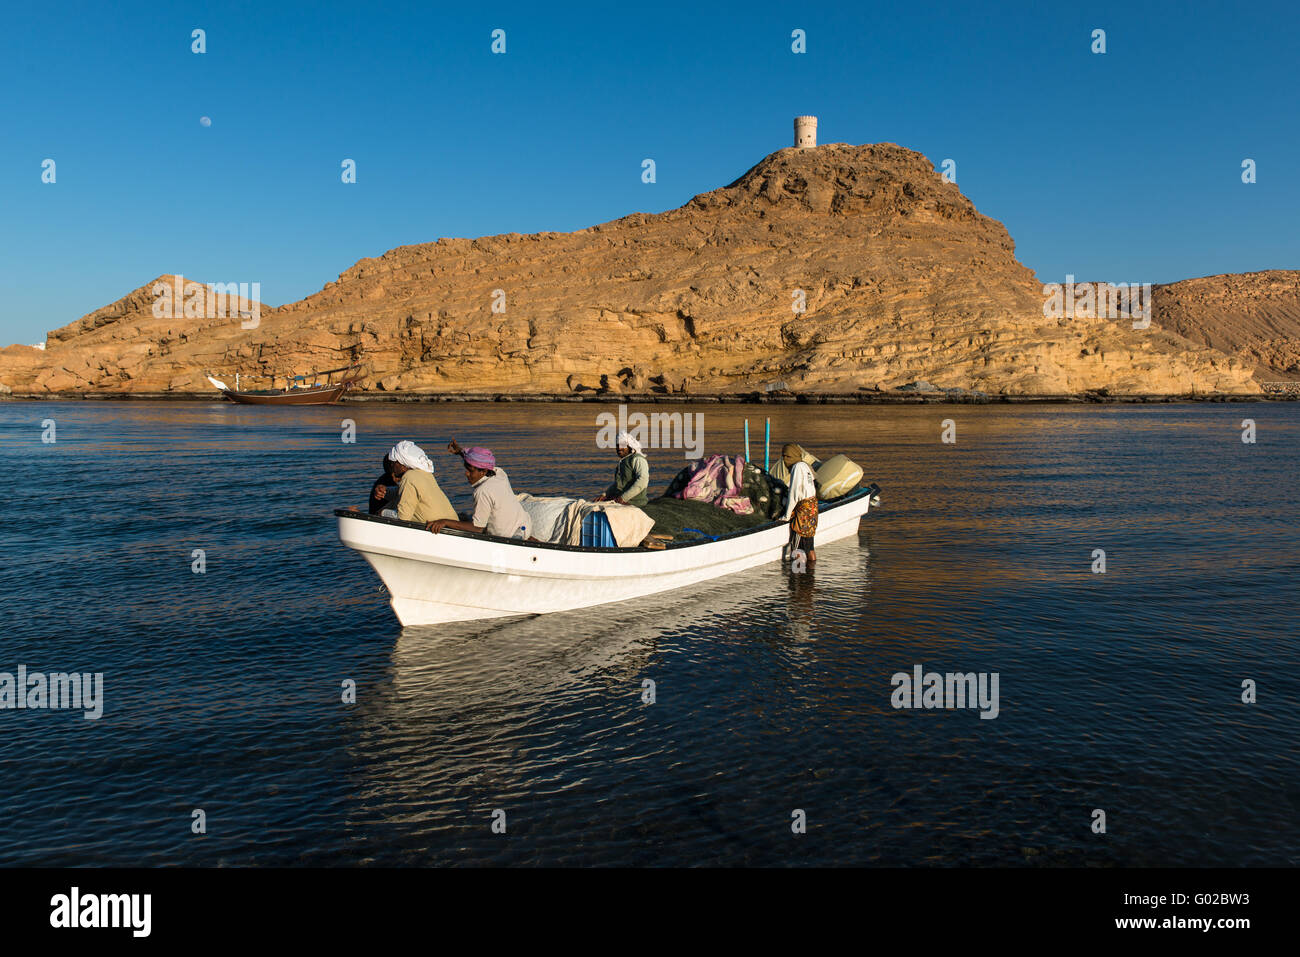 Fishermen bringing in their catch, Sur, Oman. Stock Photo